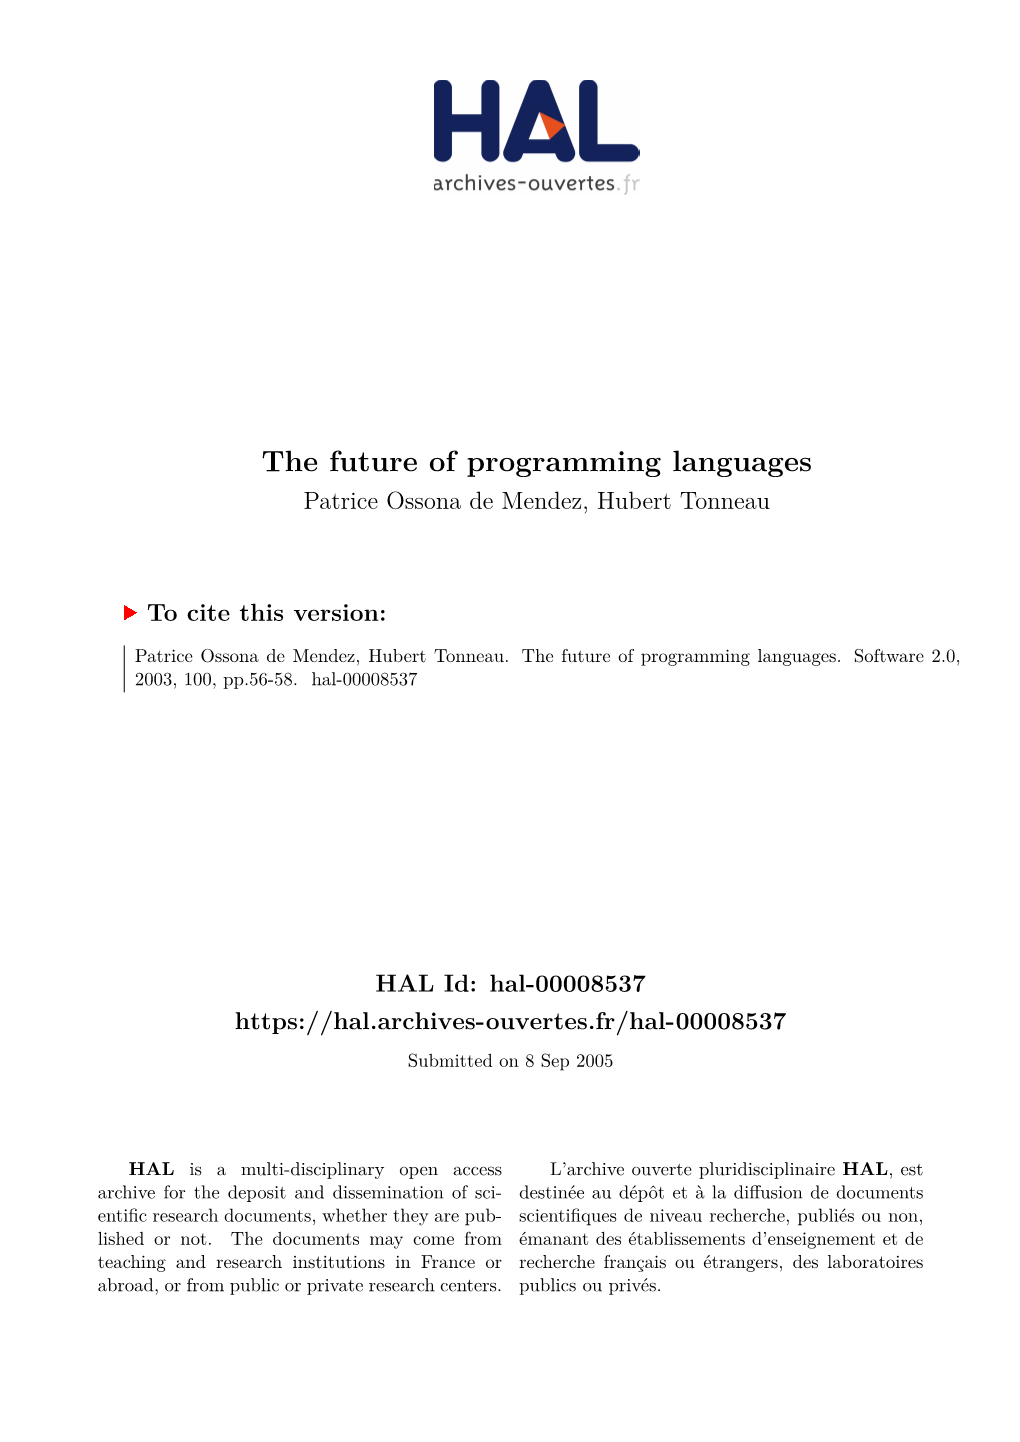 The Future of Programming Languages Patrice Ossona De Mendez, Hubert Tonneau